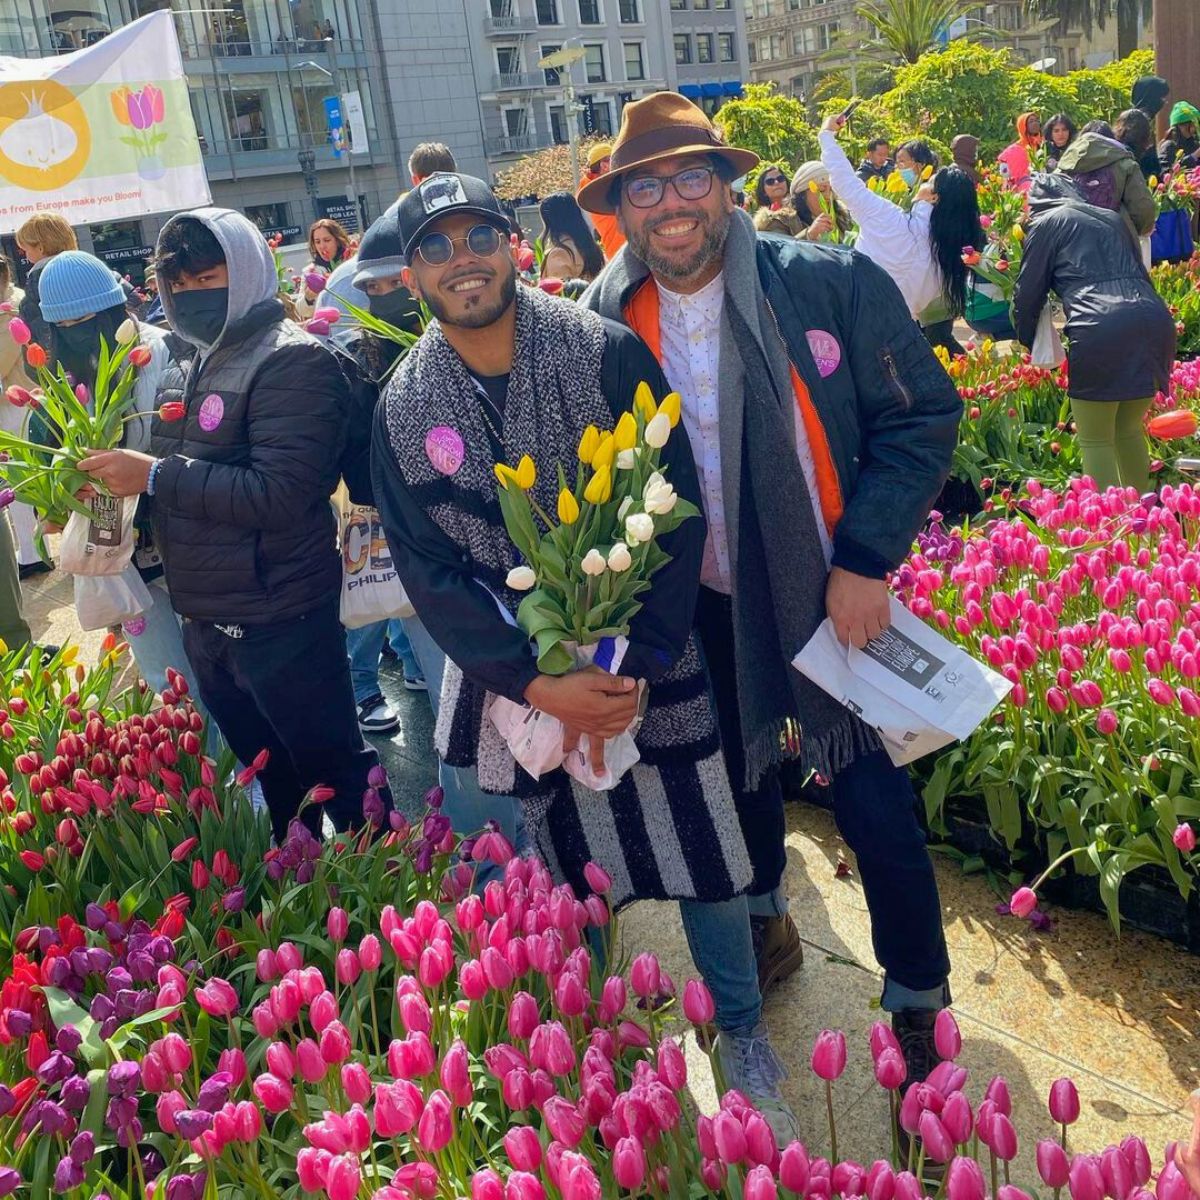 Tulip picking in Union Square San Francisco